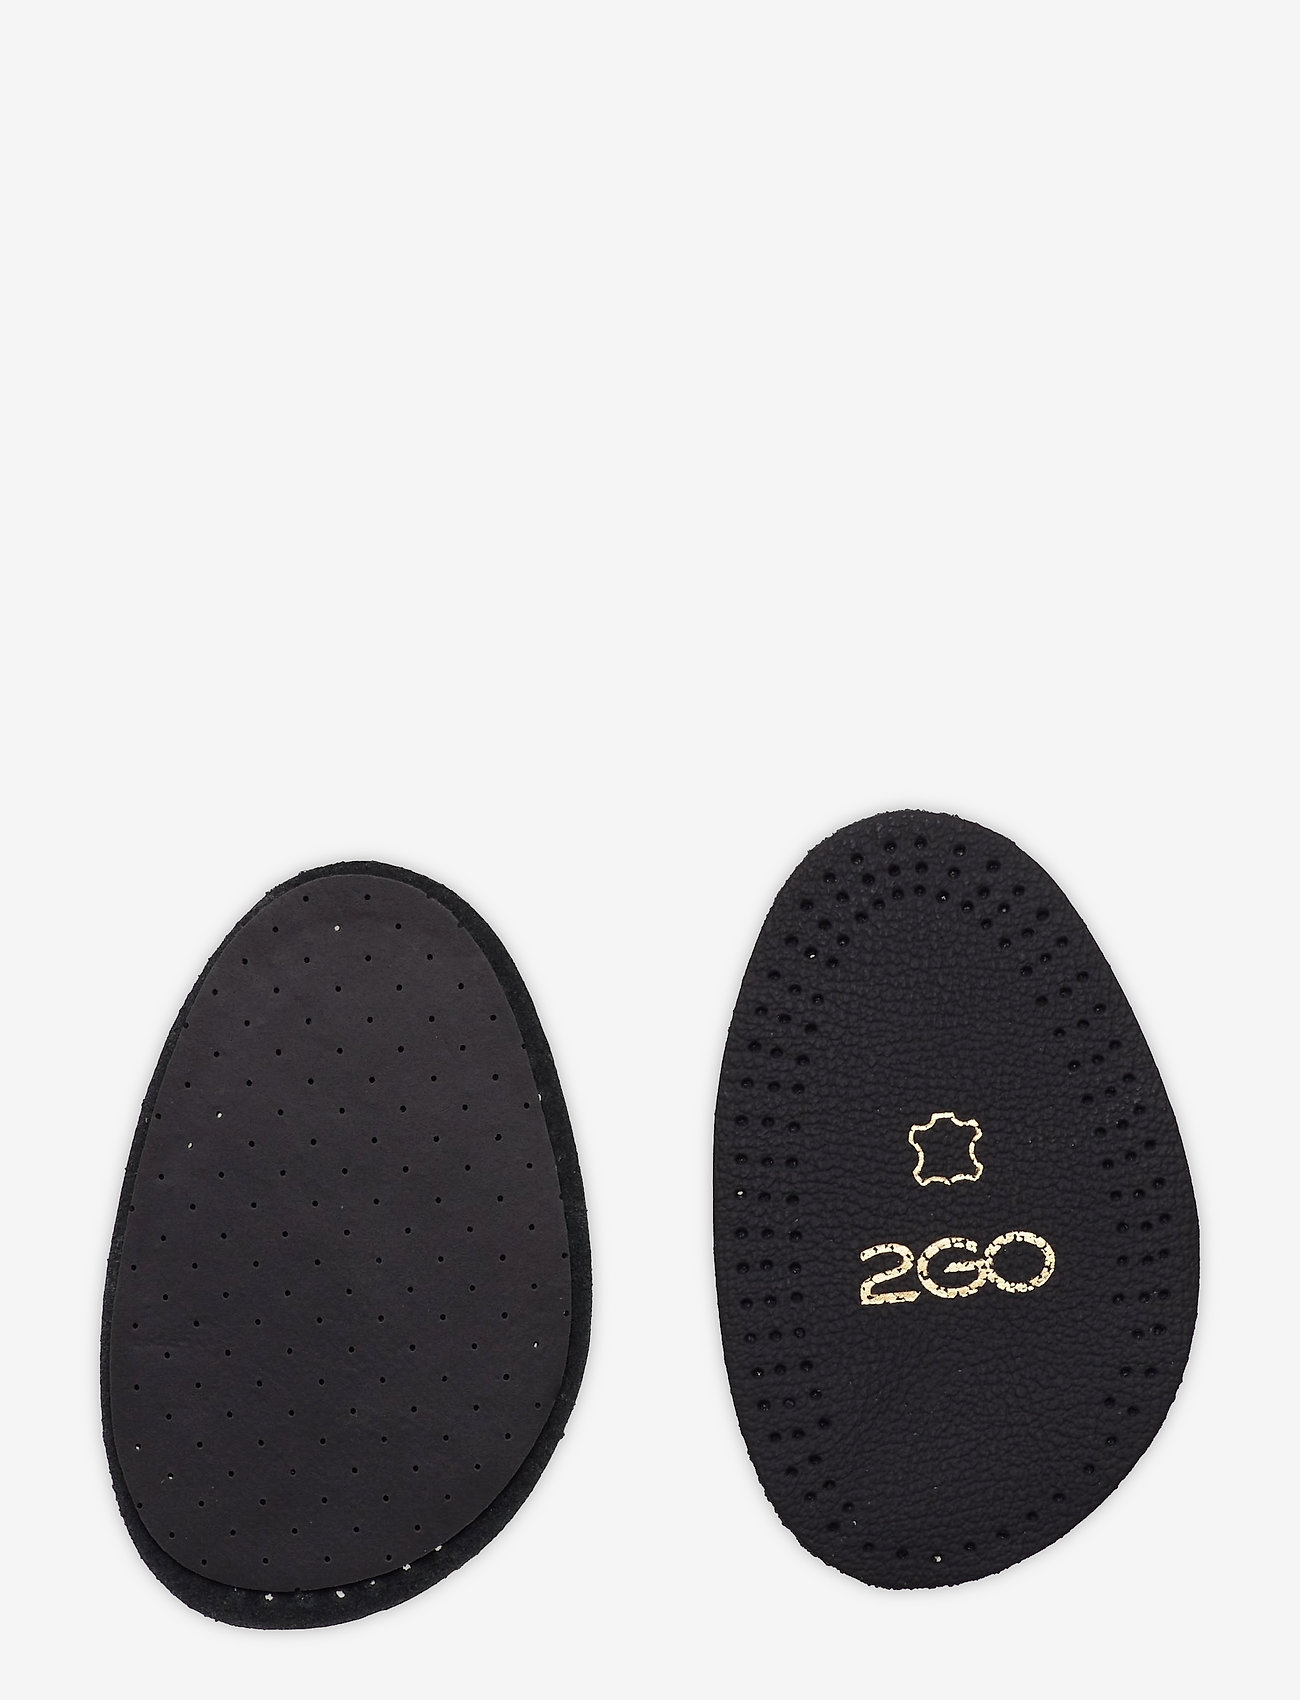 2GO - 2GO Leather - lowest prices - black - 0